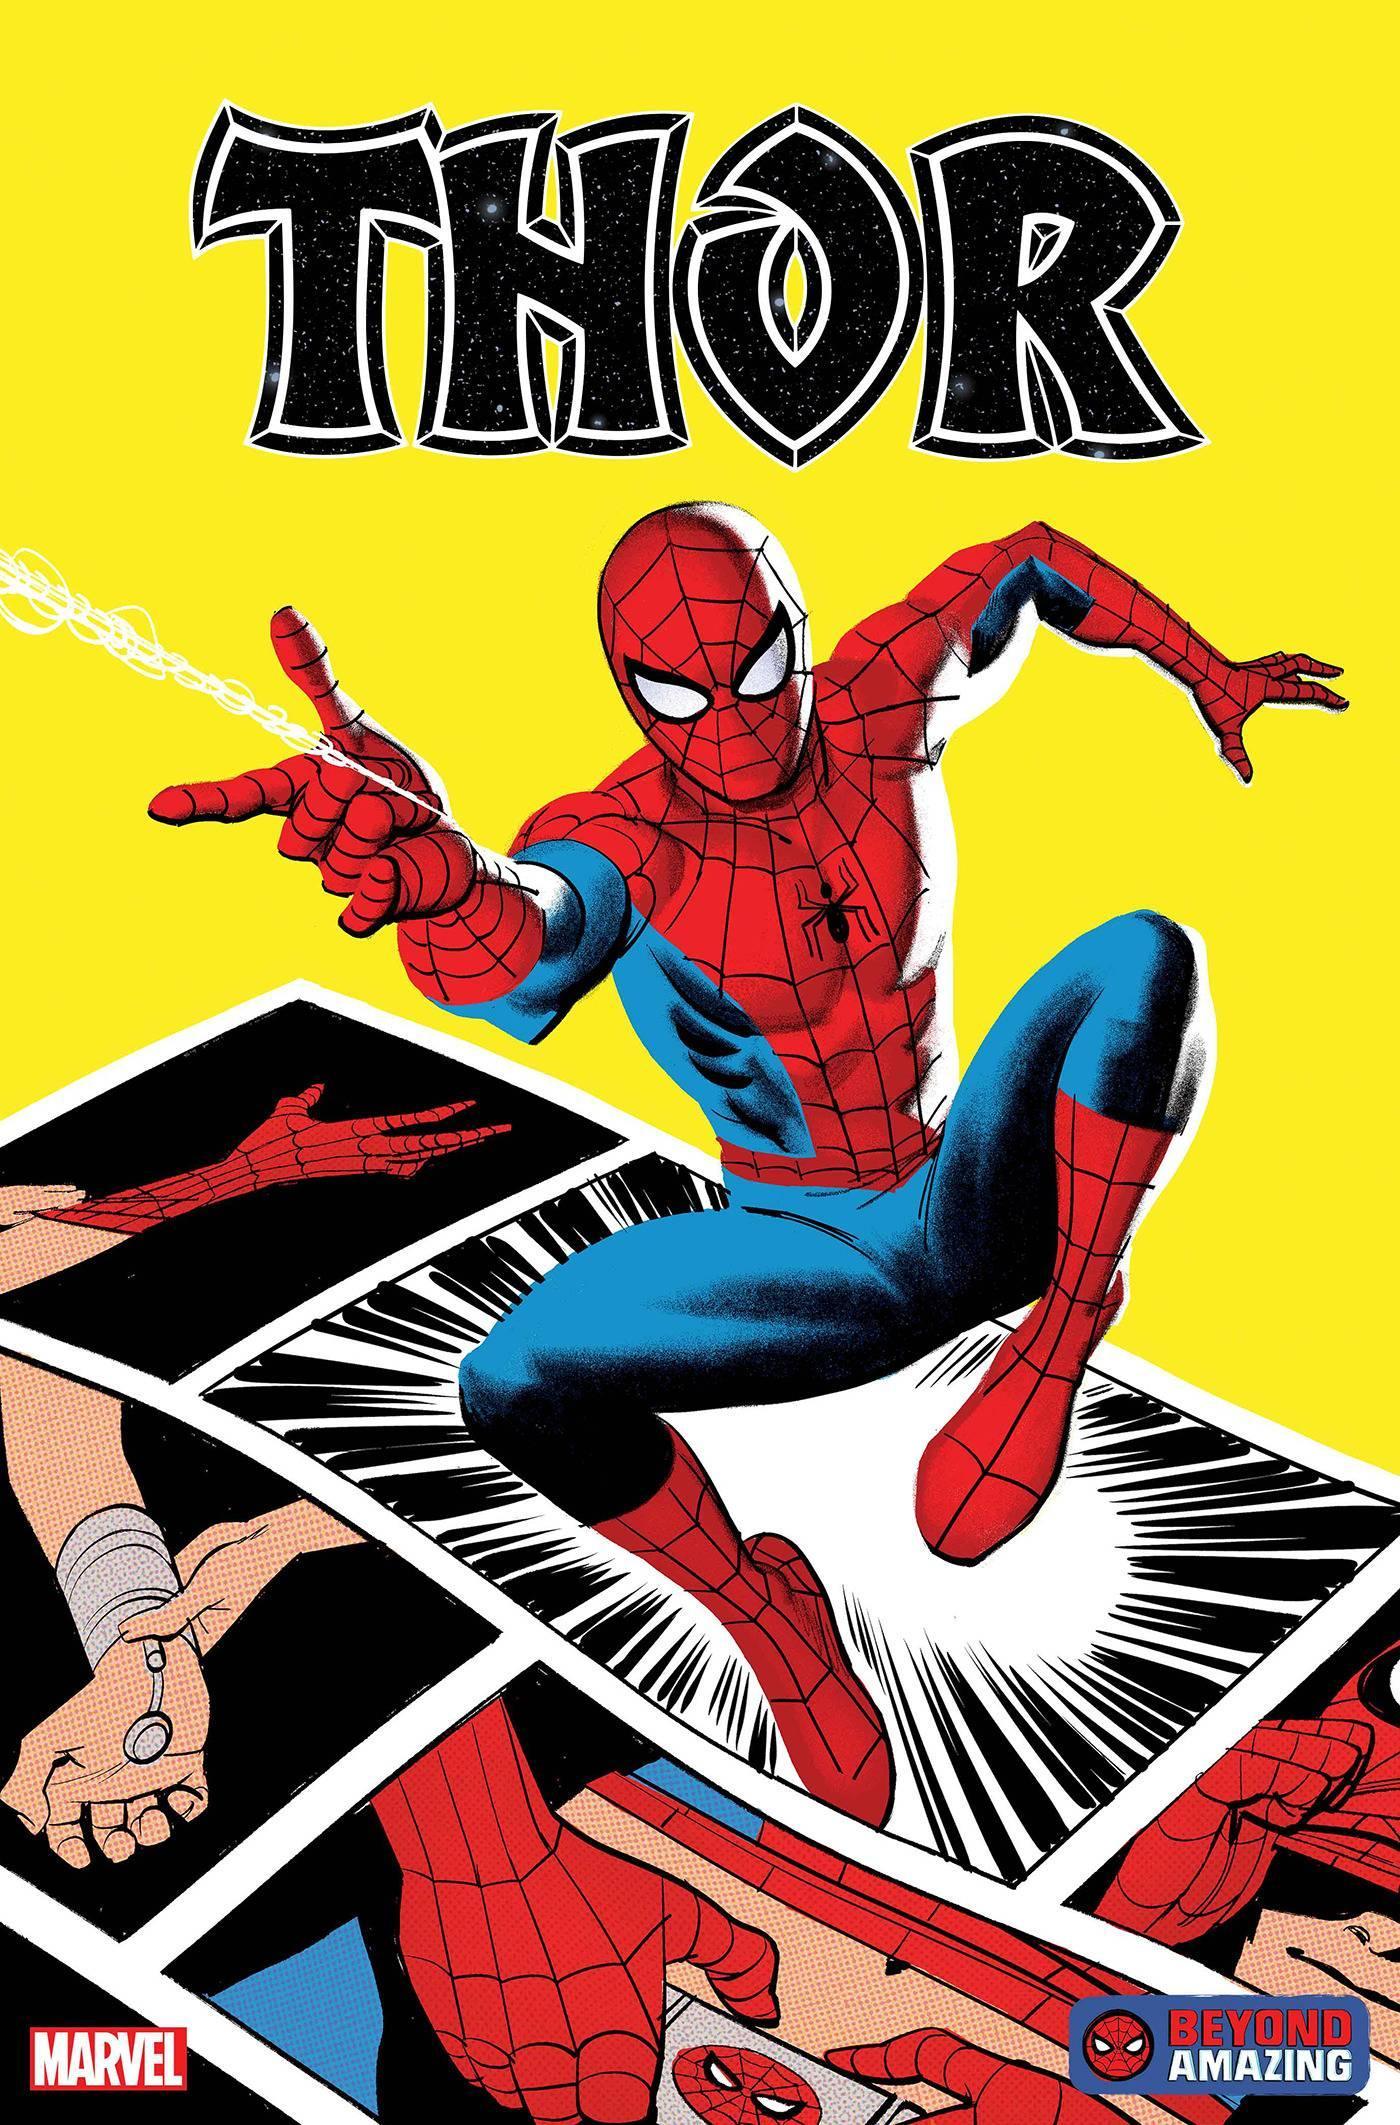 THOR VOL 6 (2020) #28 SMALLWOOD BEYOND AMAZING SPIDER-MAN VAR - Kings Comics